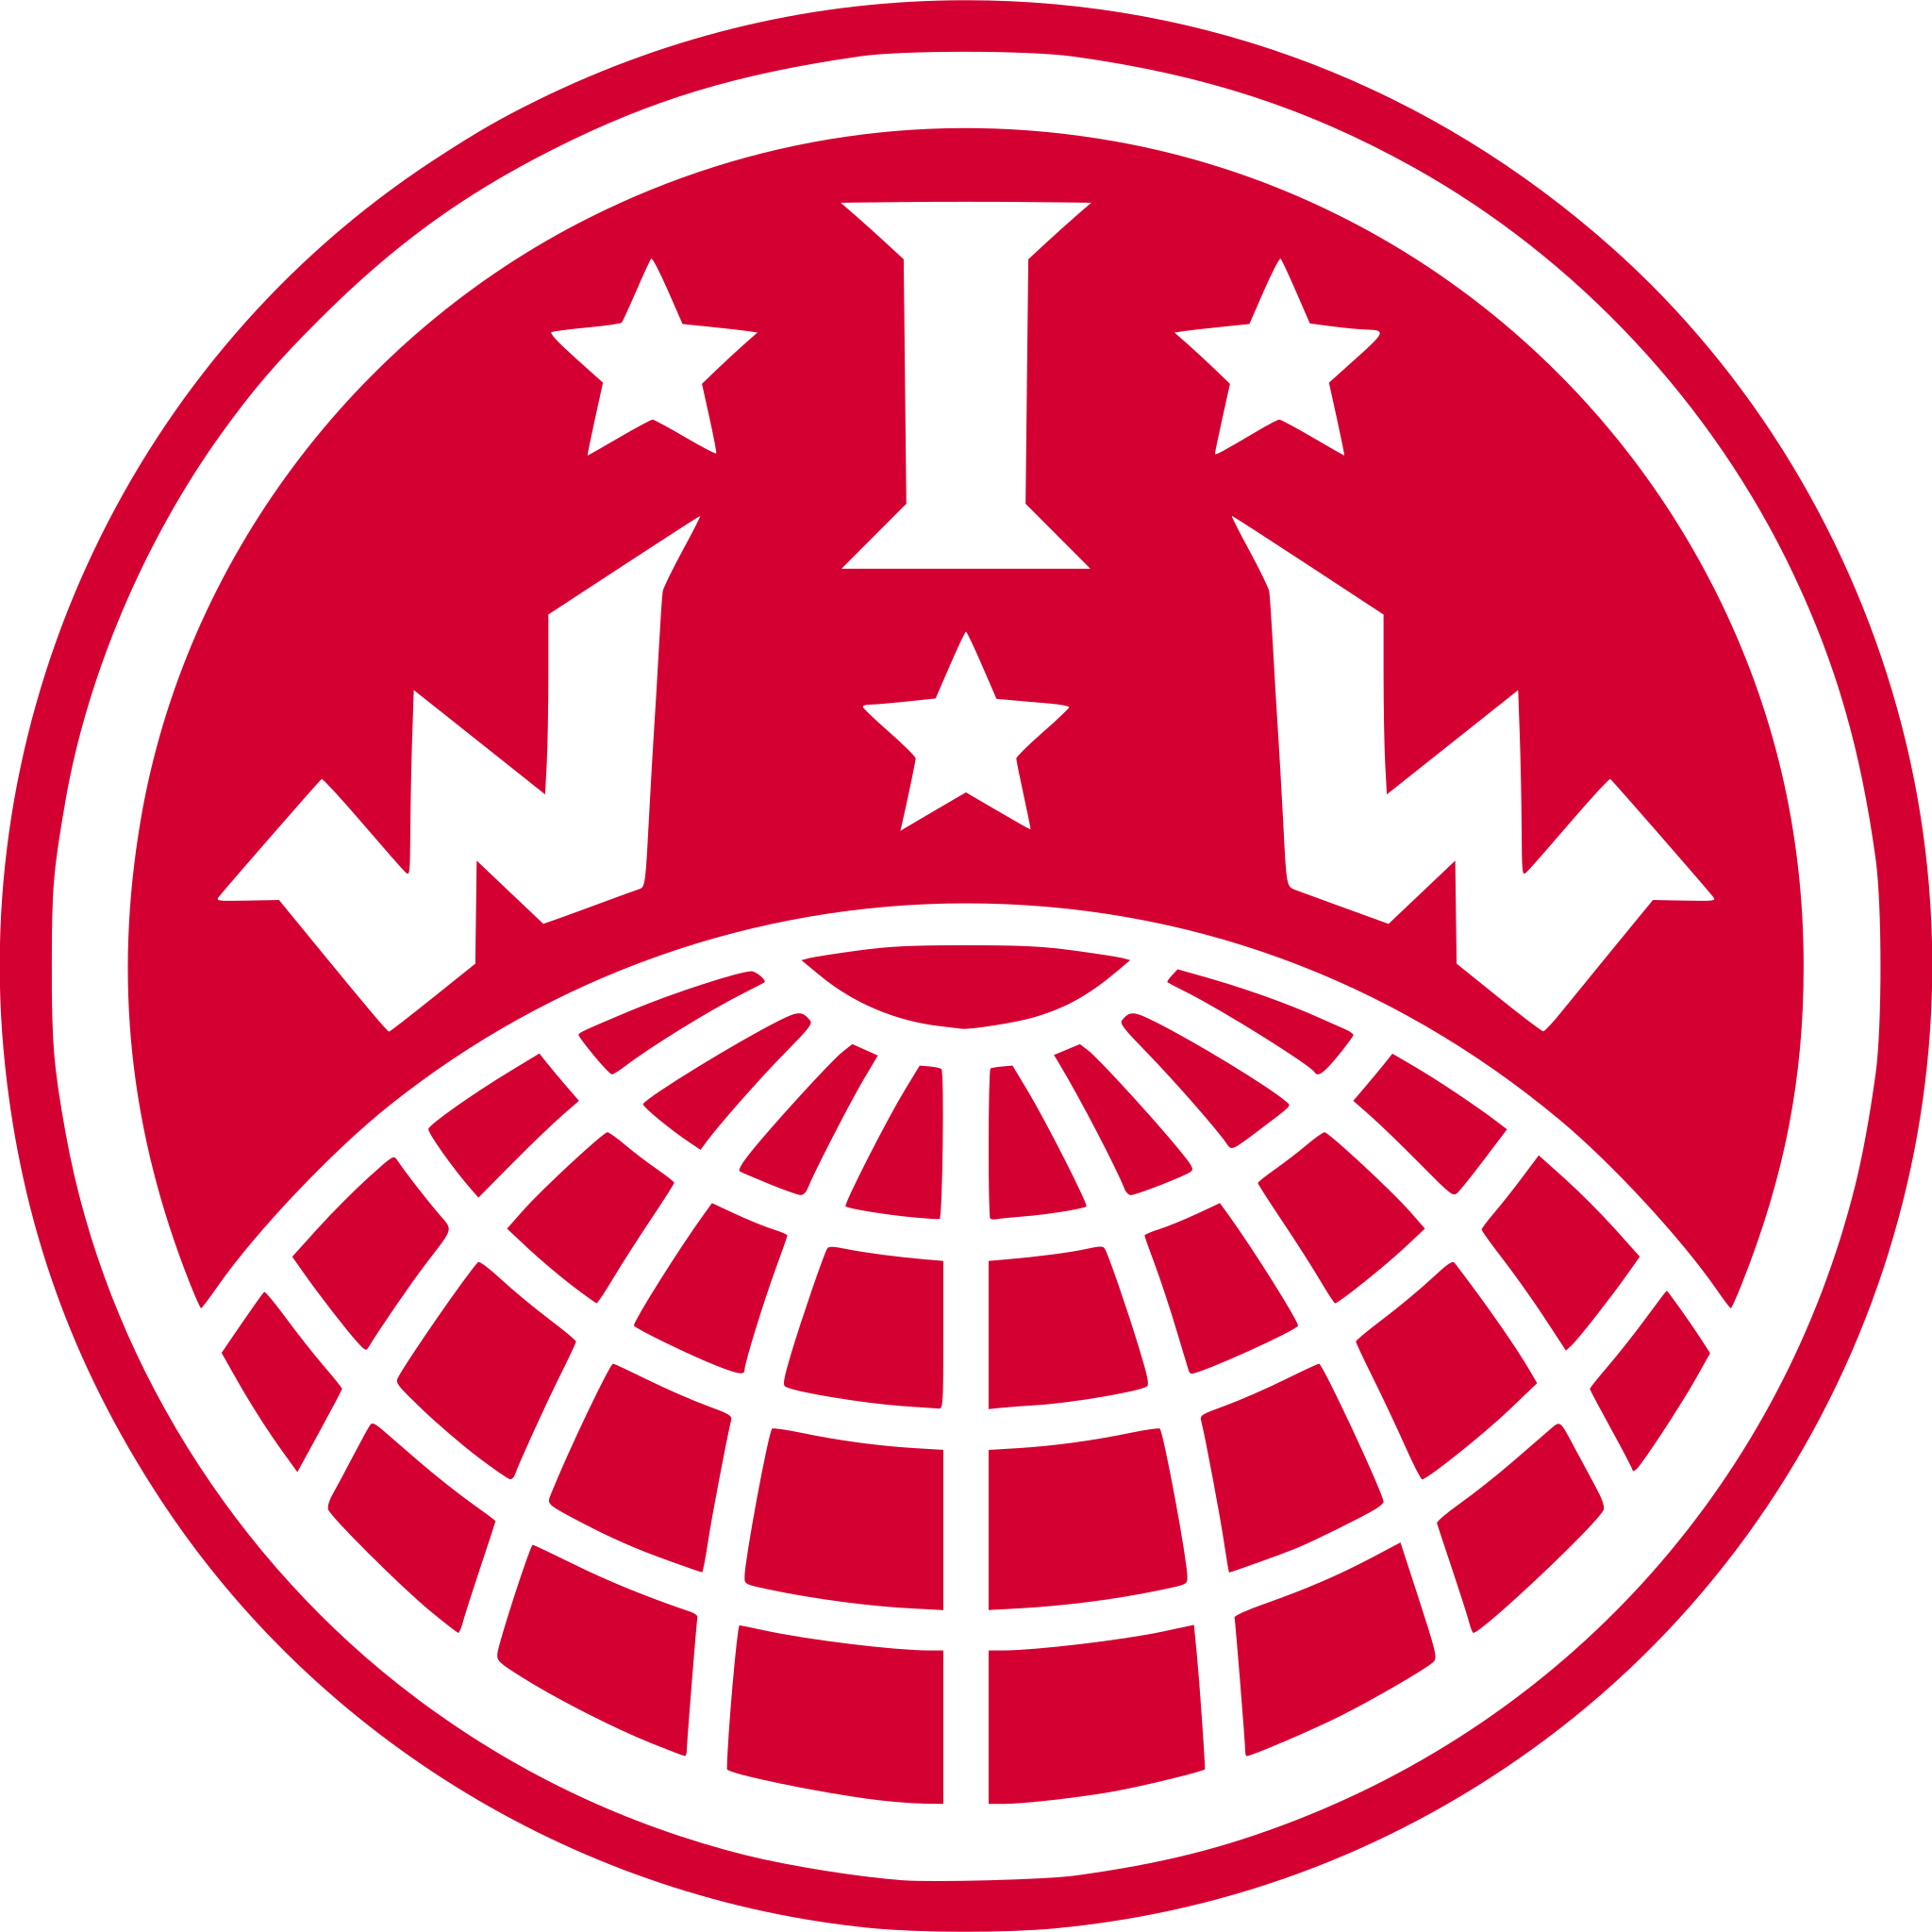 File:IWW logo.png